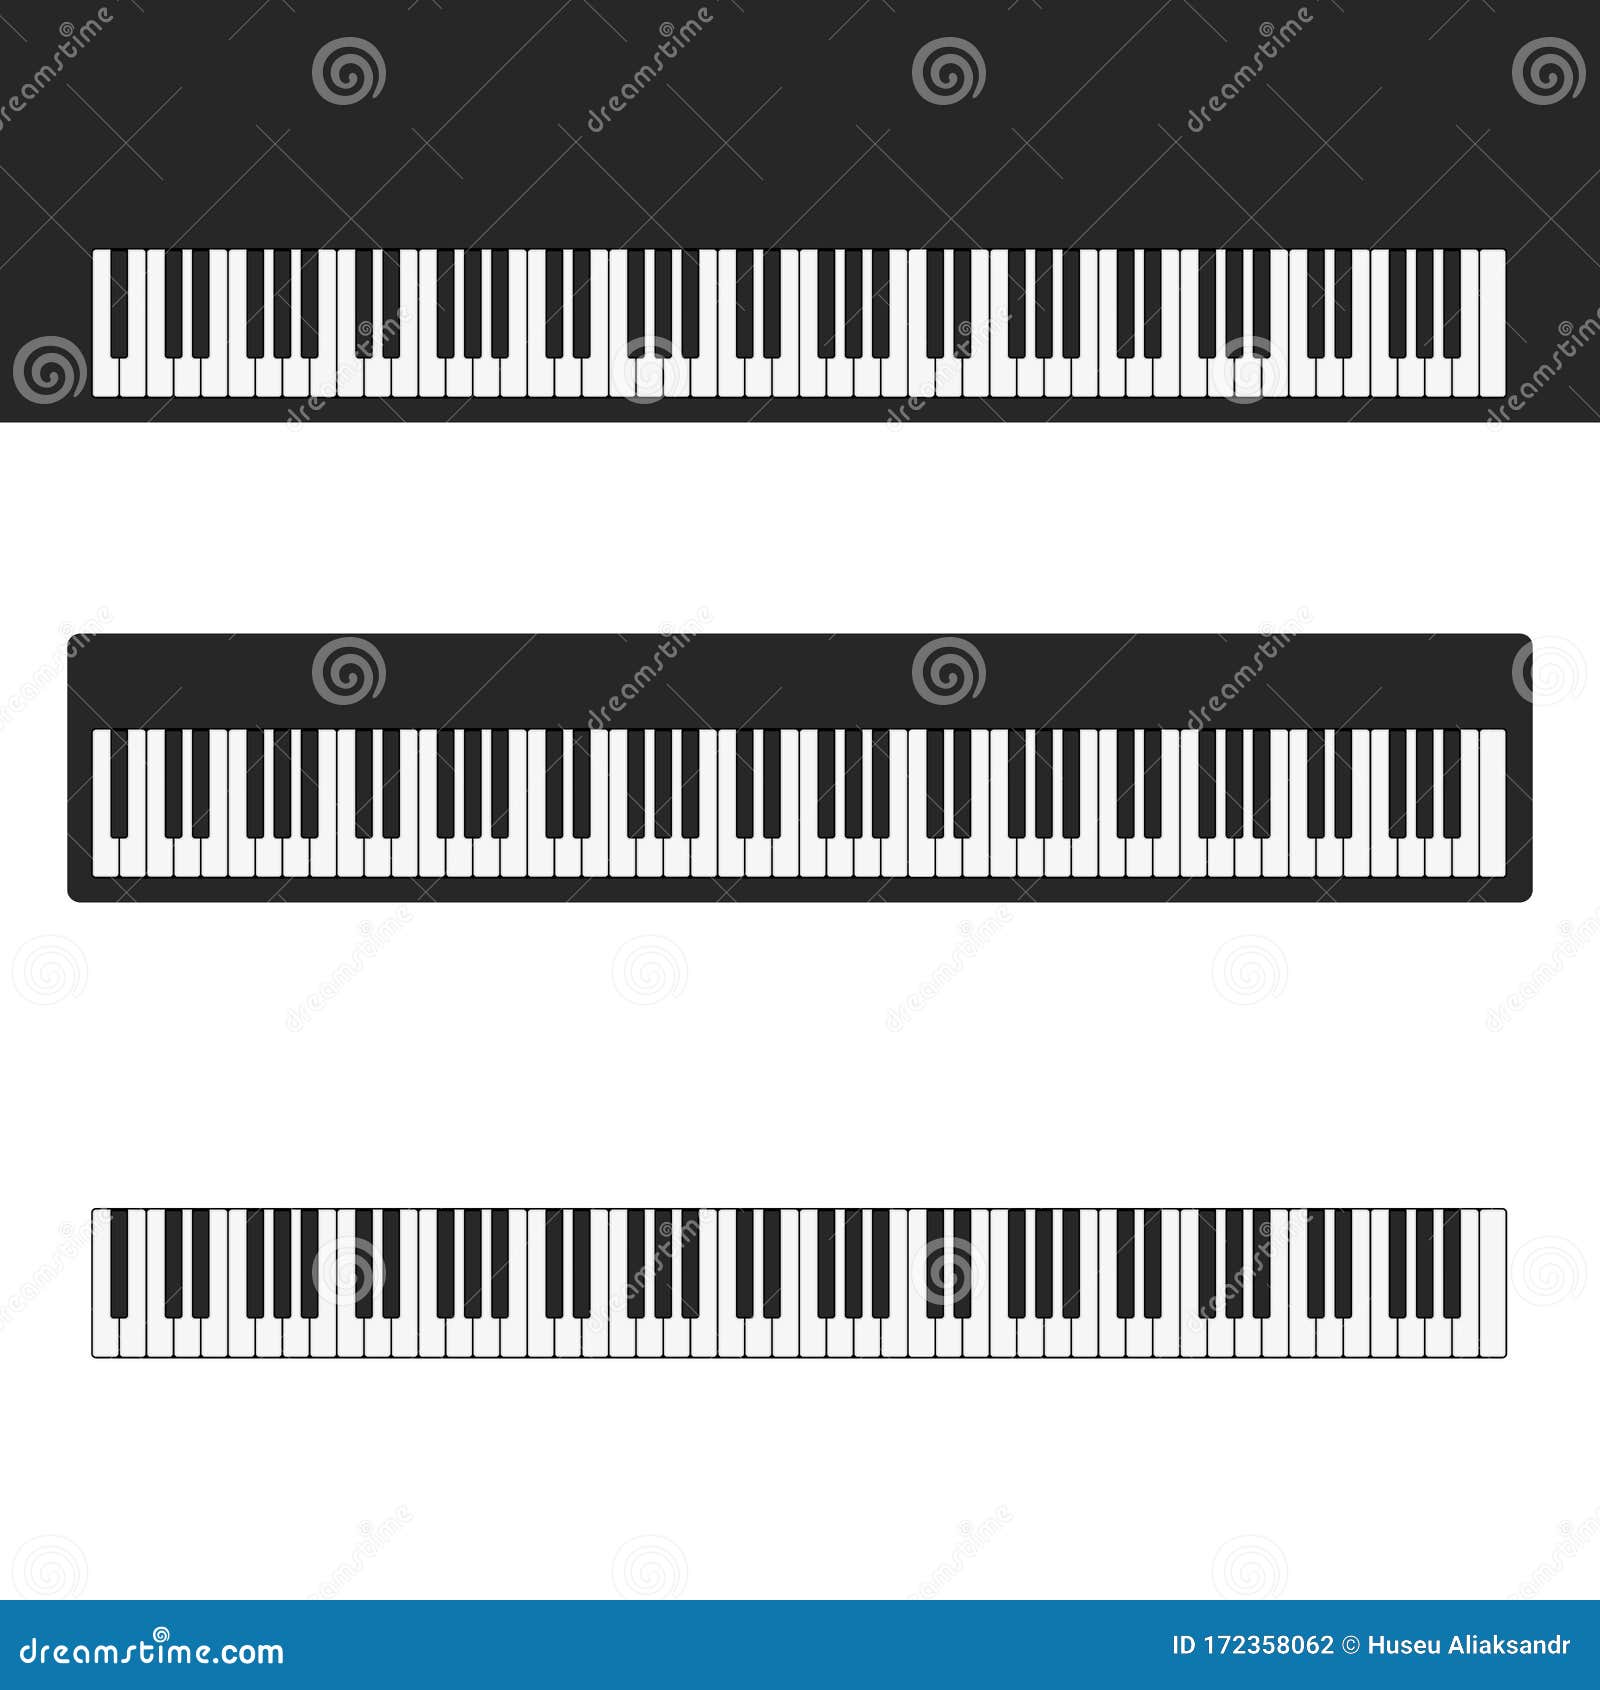 Piano Keyboard Illustration Stock Vector - Illustration of ...